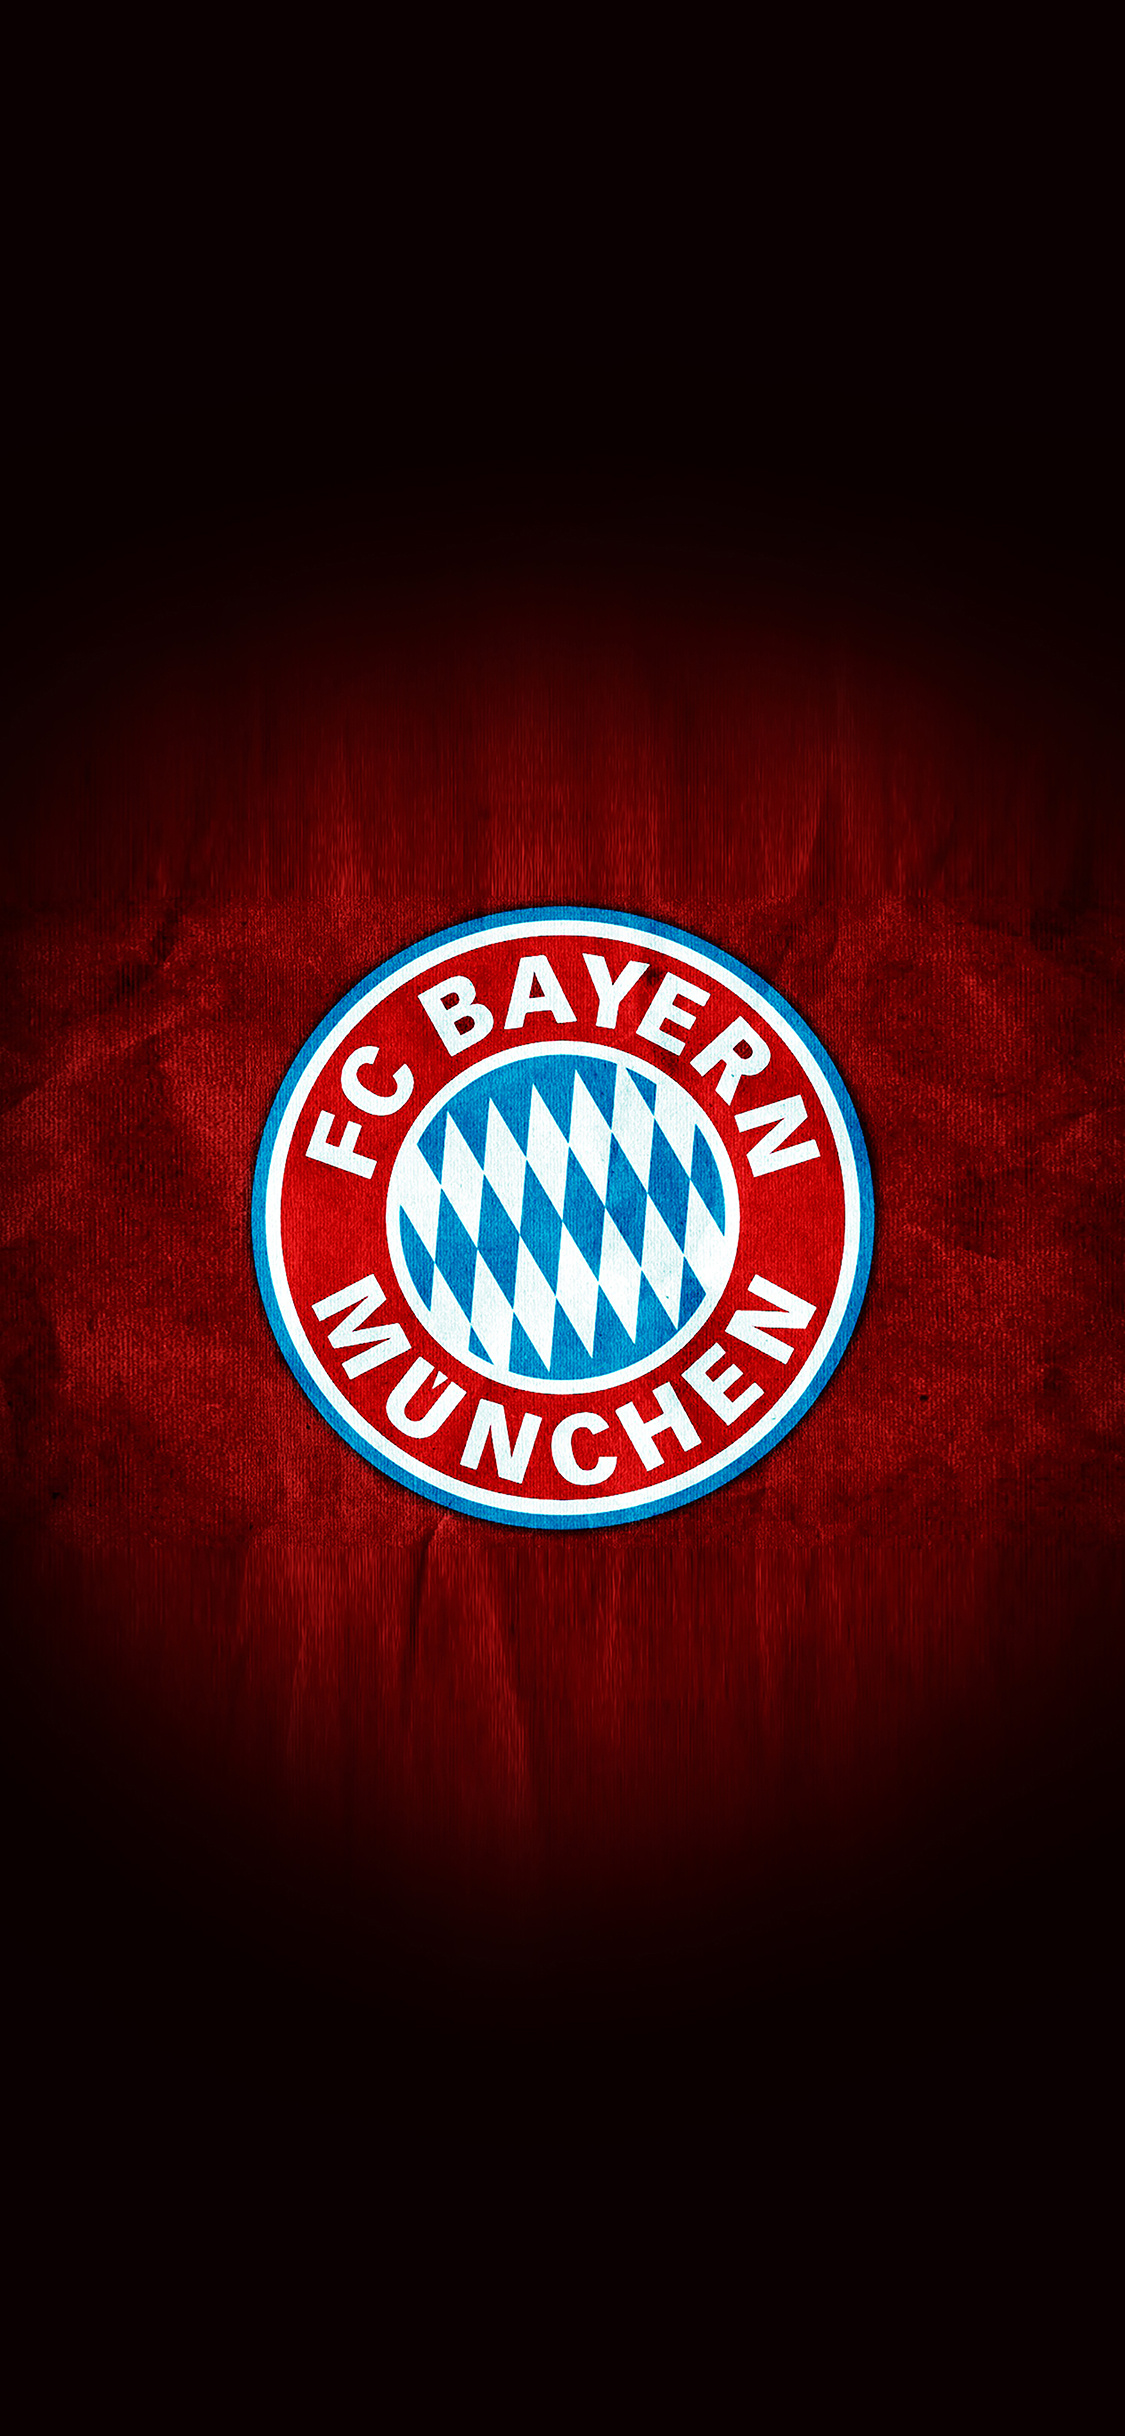 Bayern Munchen FC: Forty-one goals in one season, 2020/21, Robert Lewandowski. 1130x2440 HD Wallpaper.